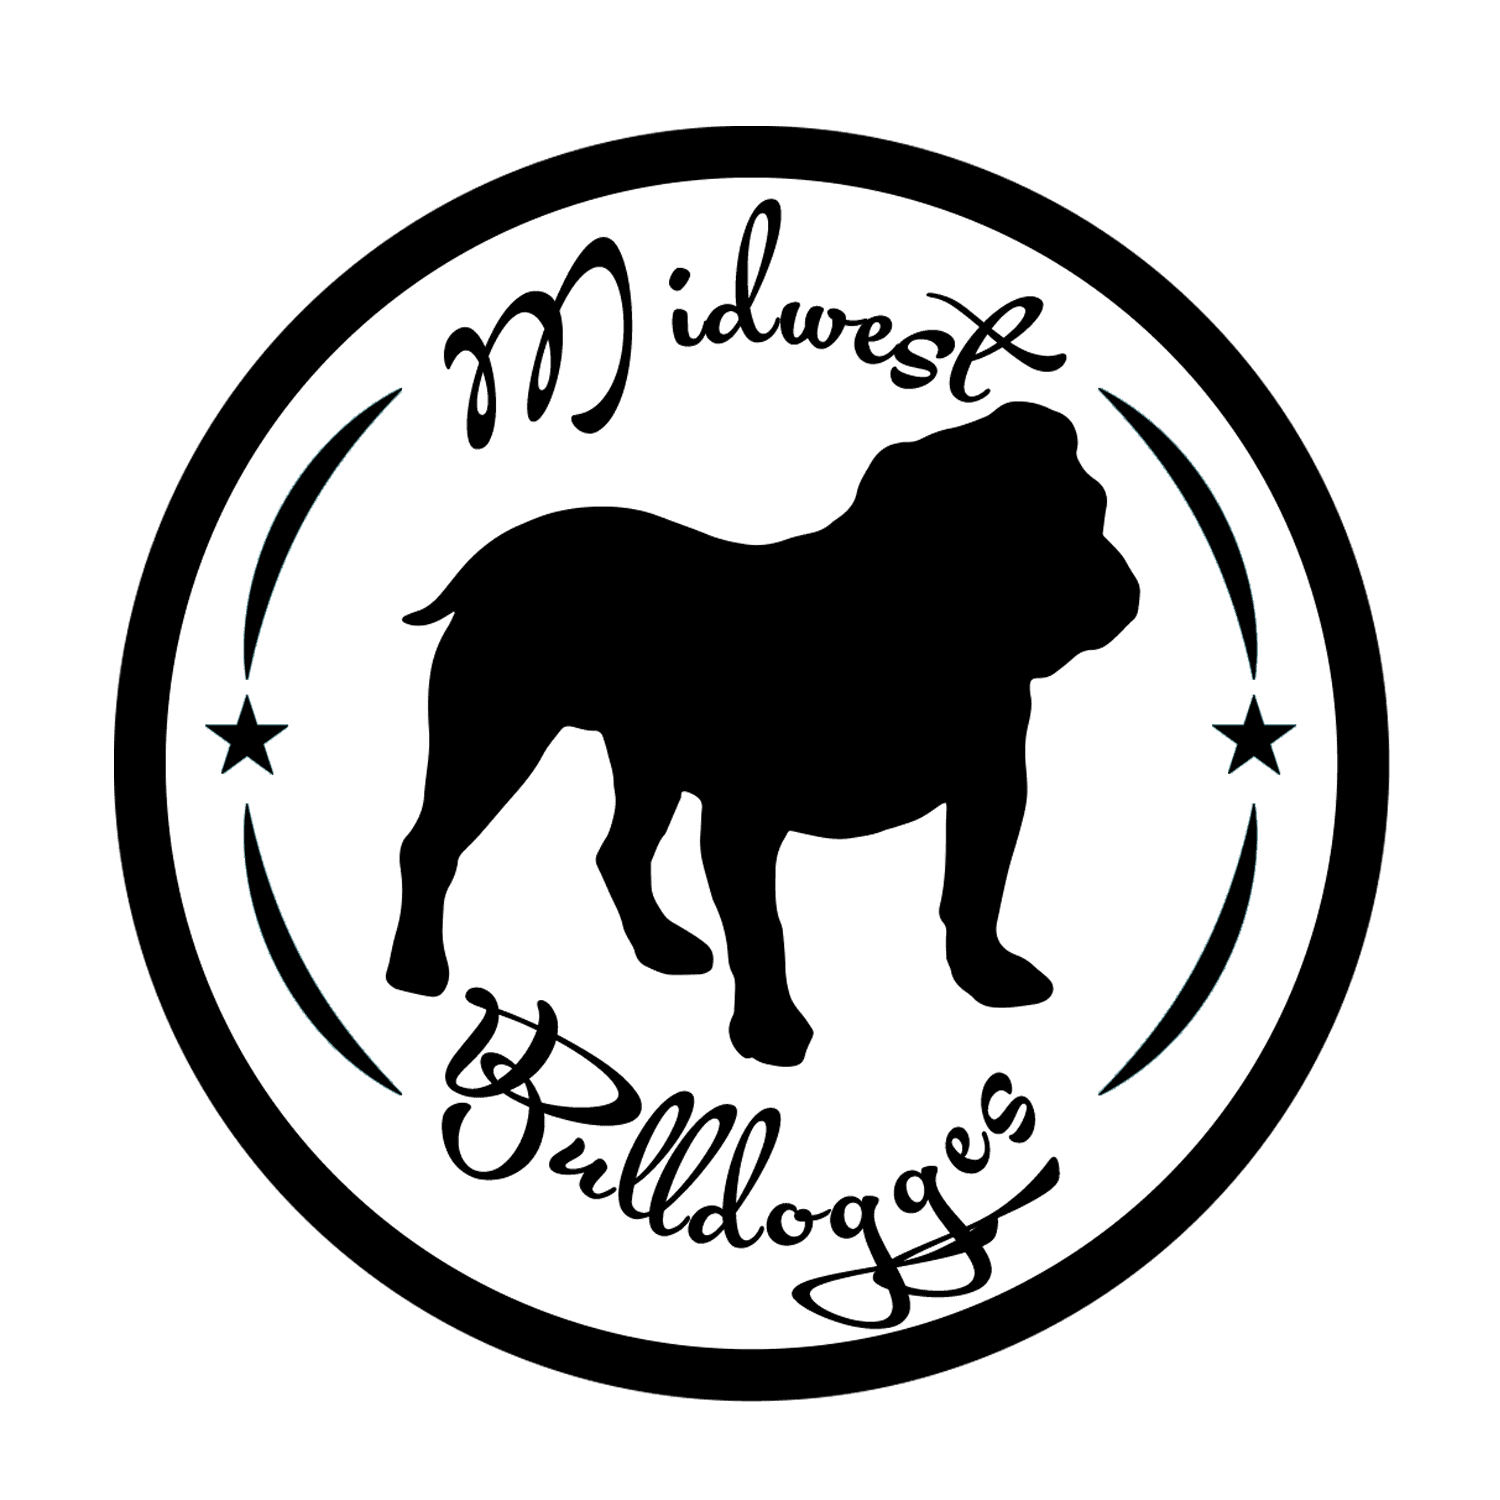 american bulldog clipart free bulldog silhouette
